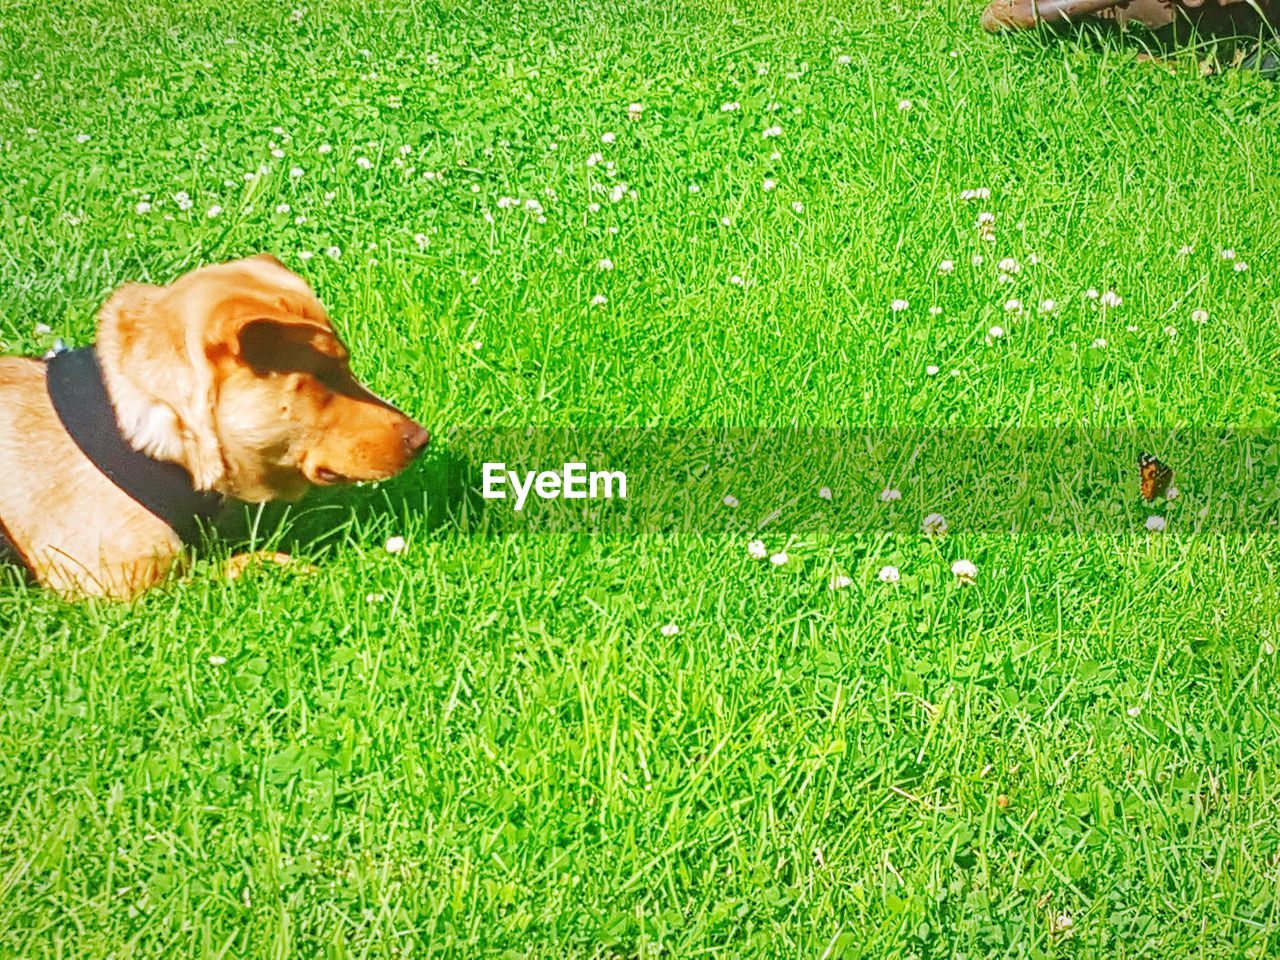 DOG LYING ON GRASS FIELD